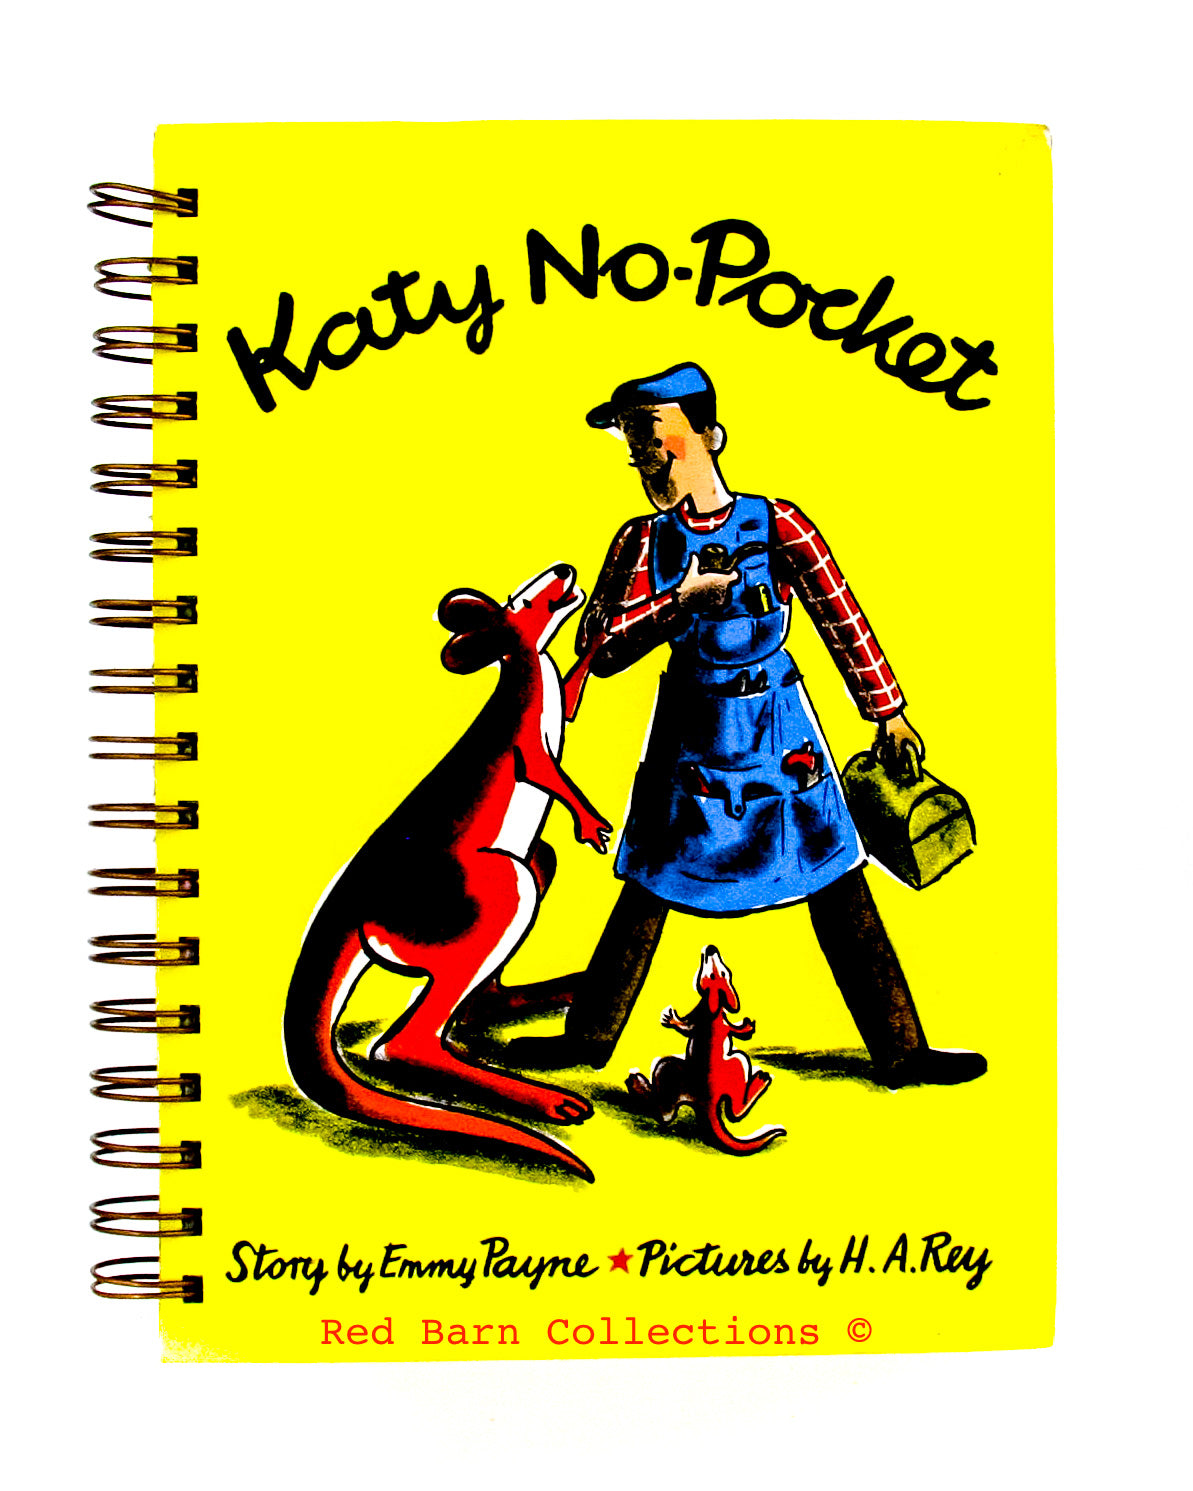 Katy No-Pocket-Red Barn Collections